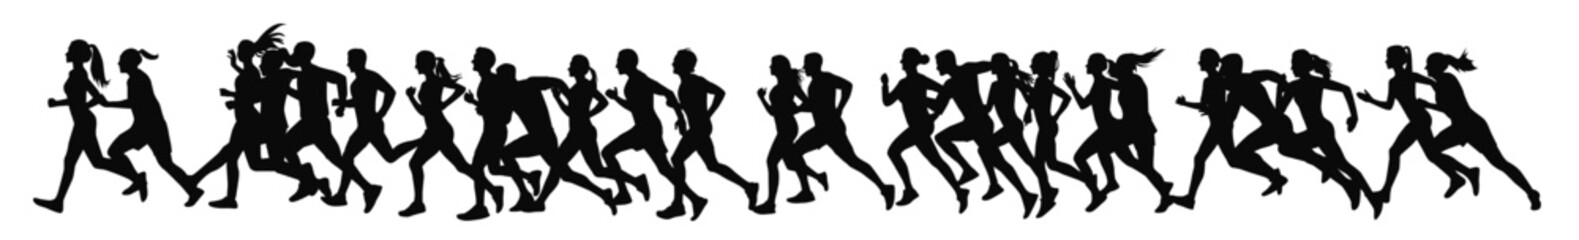 Running men and women silhouette	